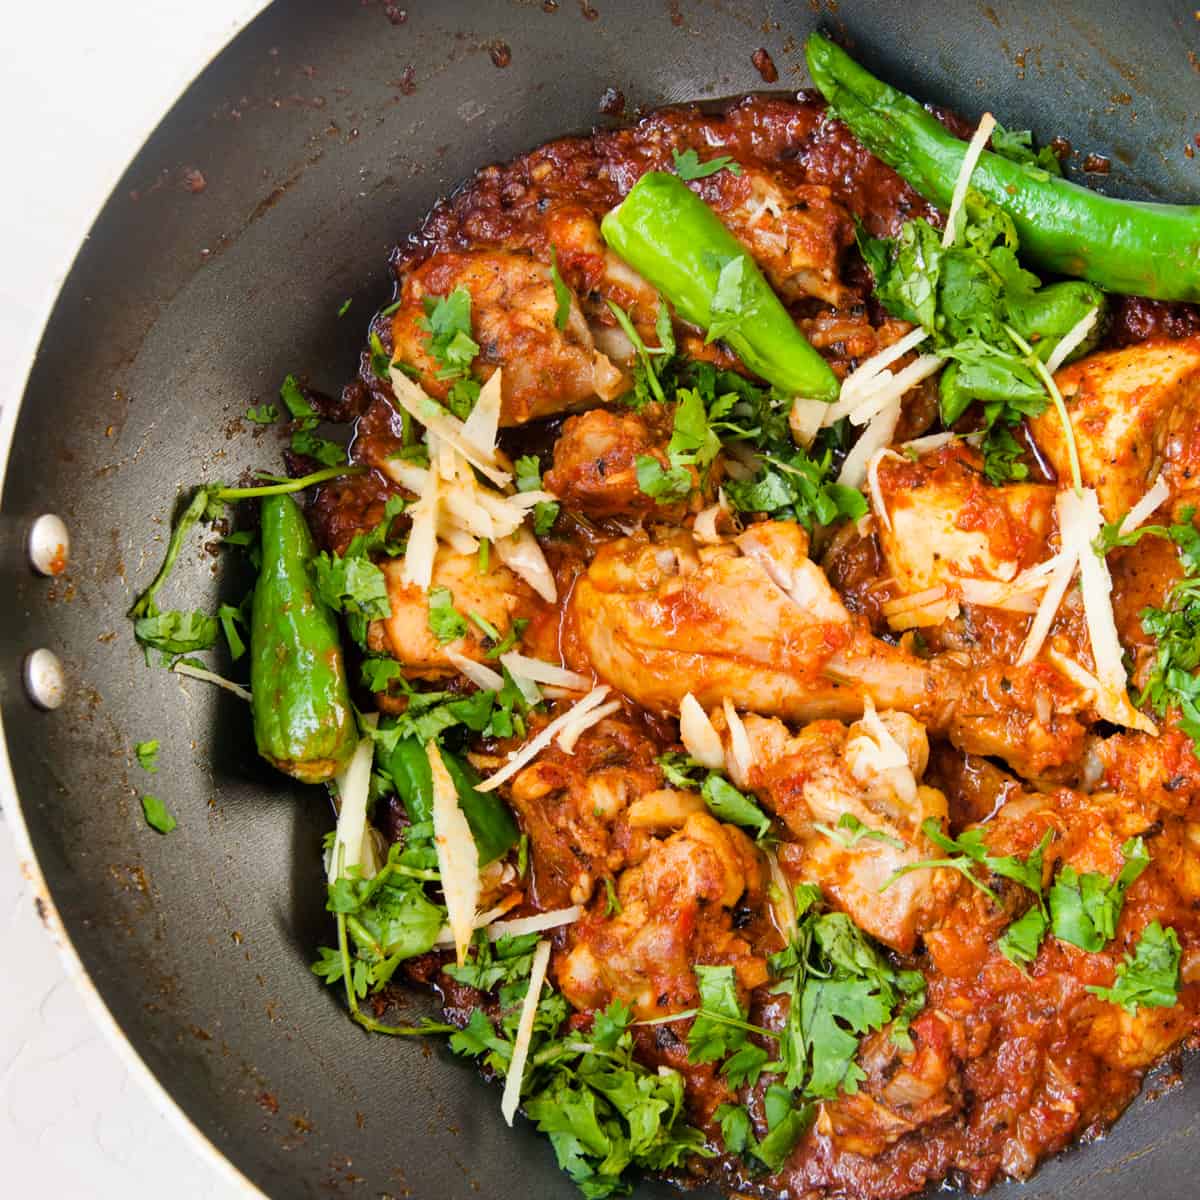 Spicy dhaba chicken karahi in the wok.